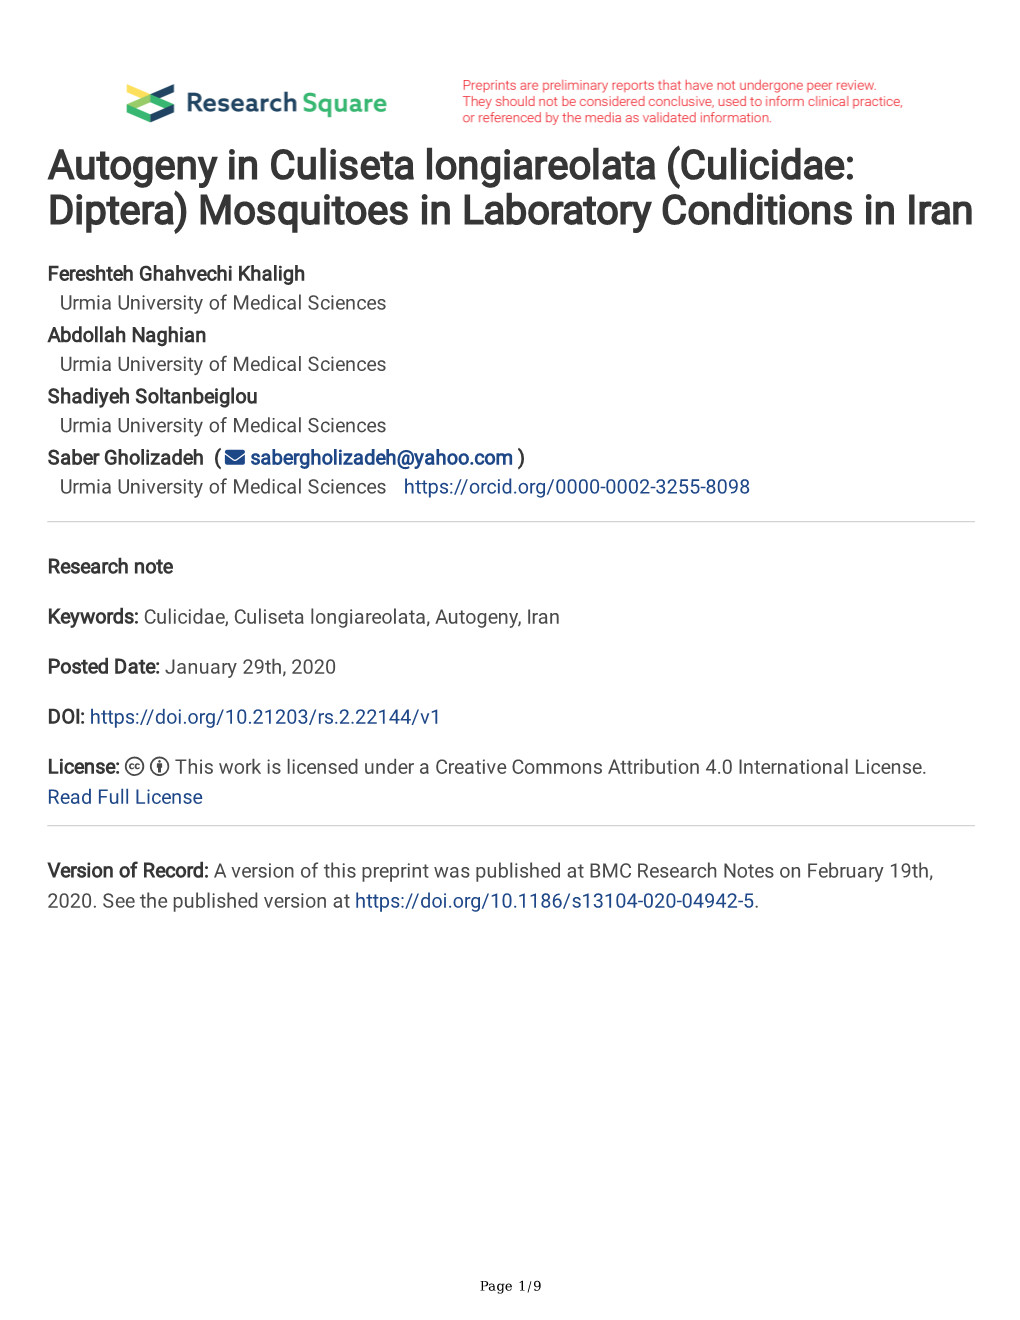 Autogeny in Culiseta Longiareolata (Culicidae: Diptera) Mosquitoes in Laboratory Conditions in Iran